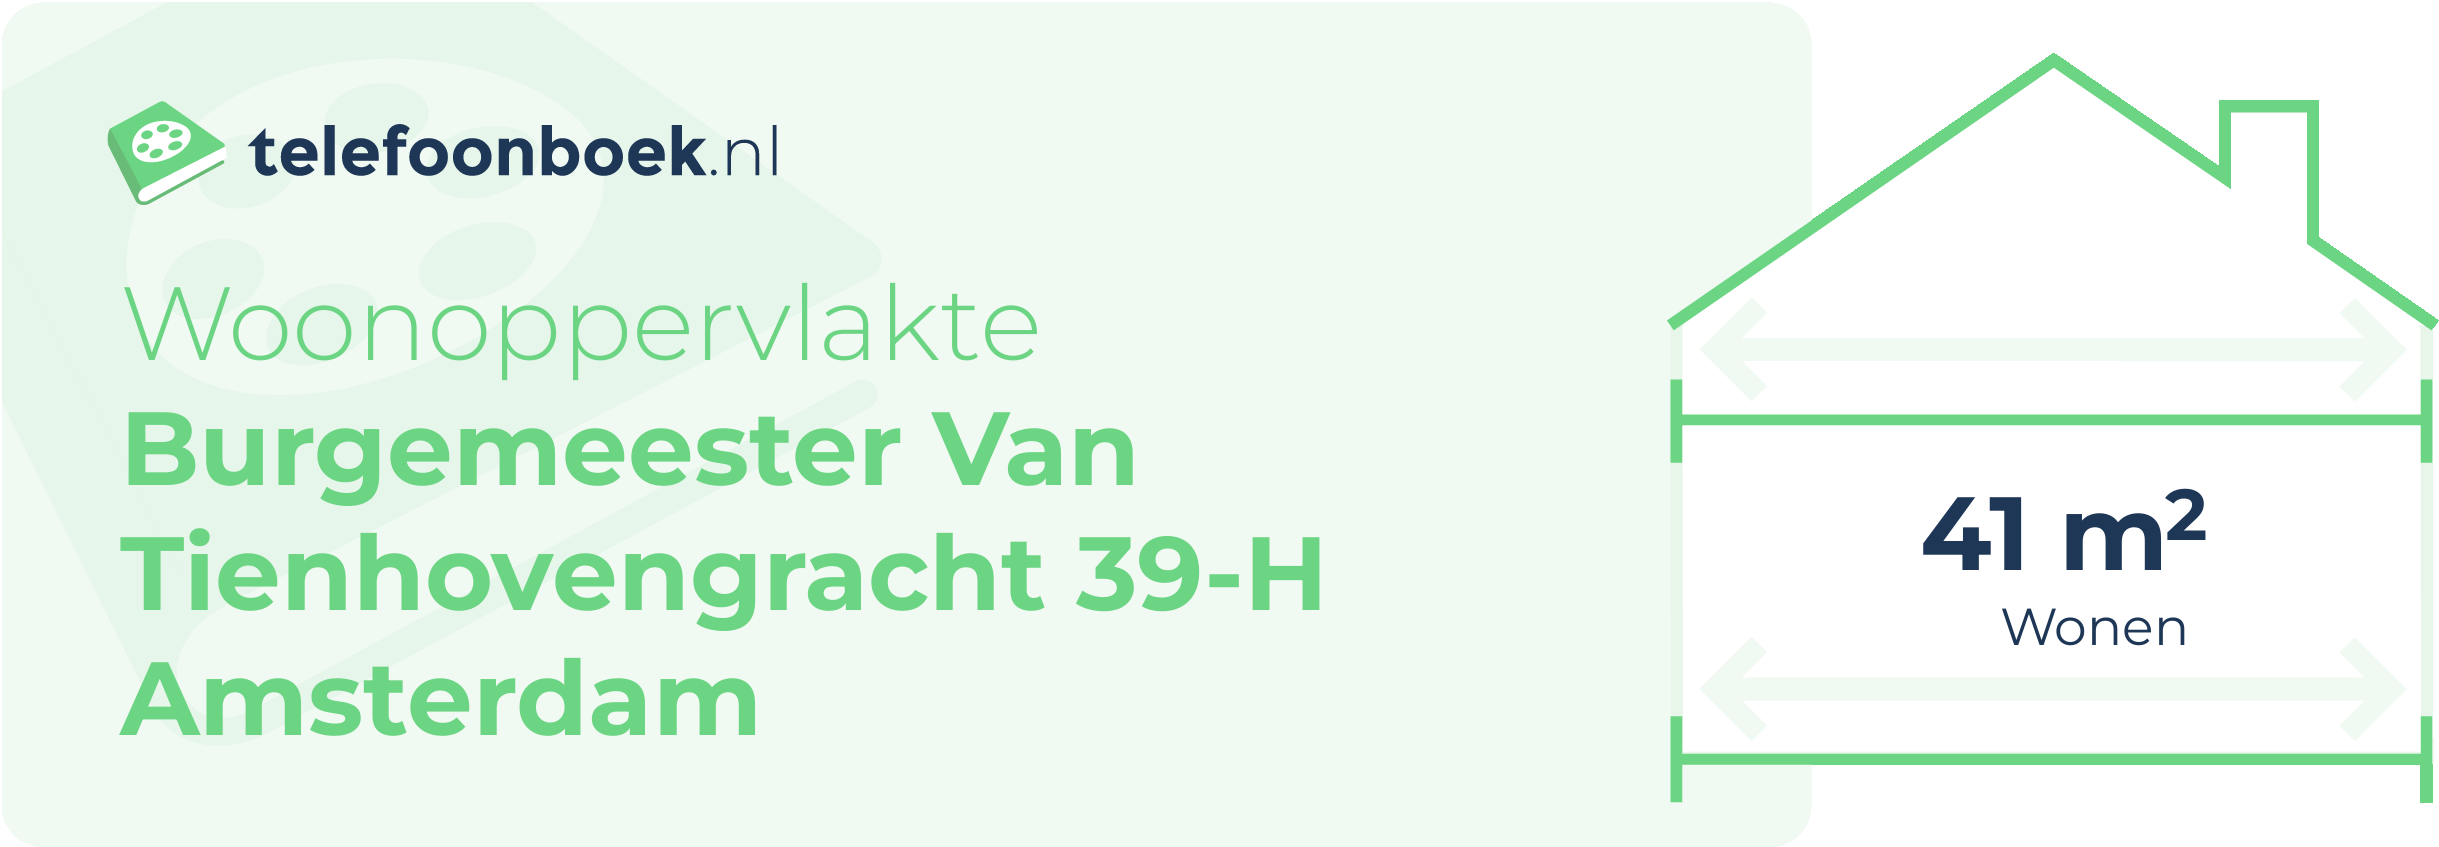 Woonoppervlakte Burgemeester Van Tienhovengracht 39-H Amsterdam